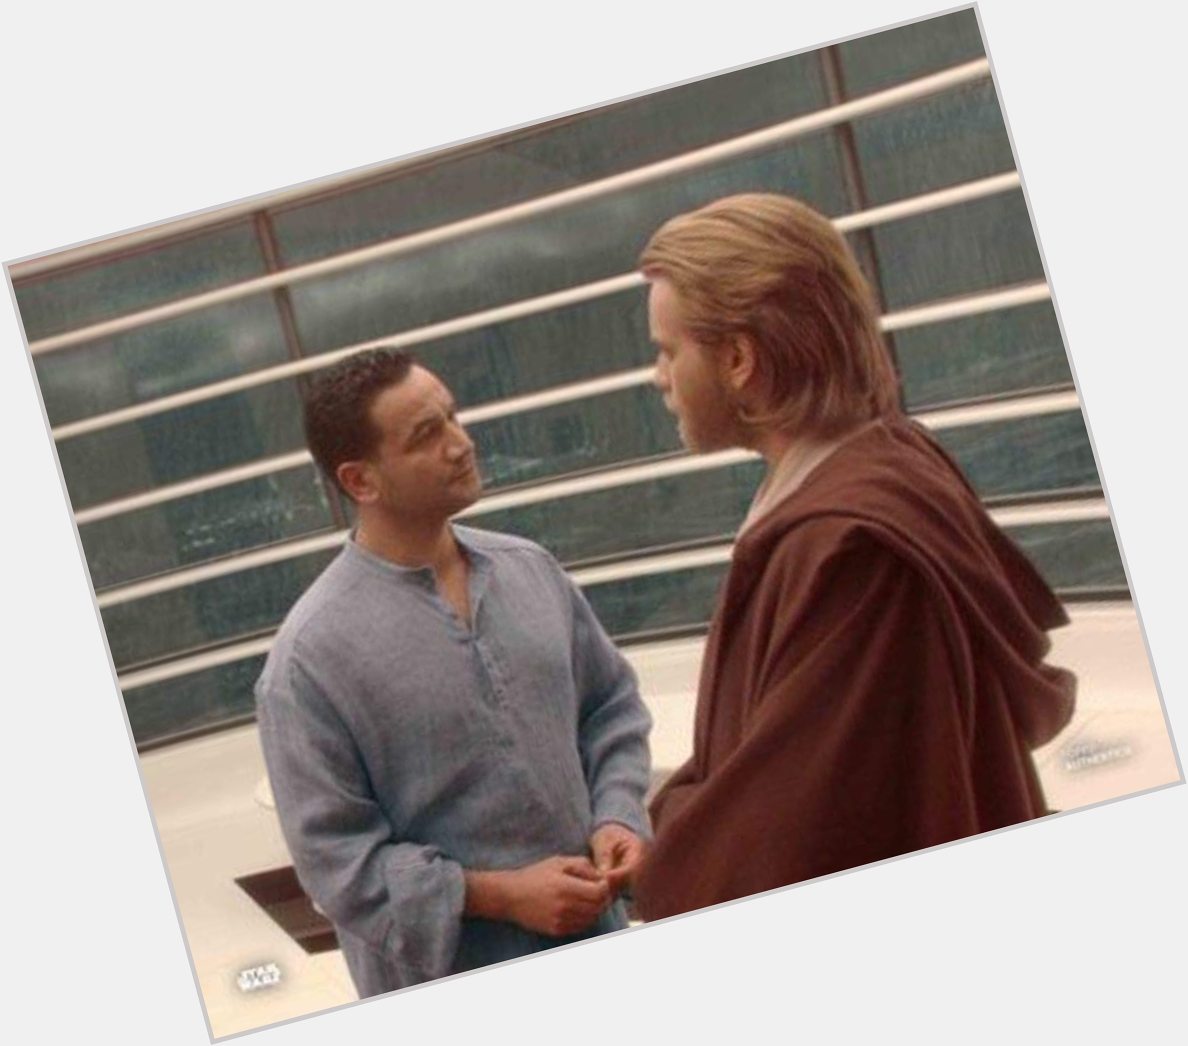 Happy birthday to Ewan McGregor aka in the prequels

Always a pleasure to meet a Jedi 